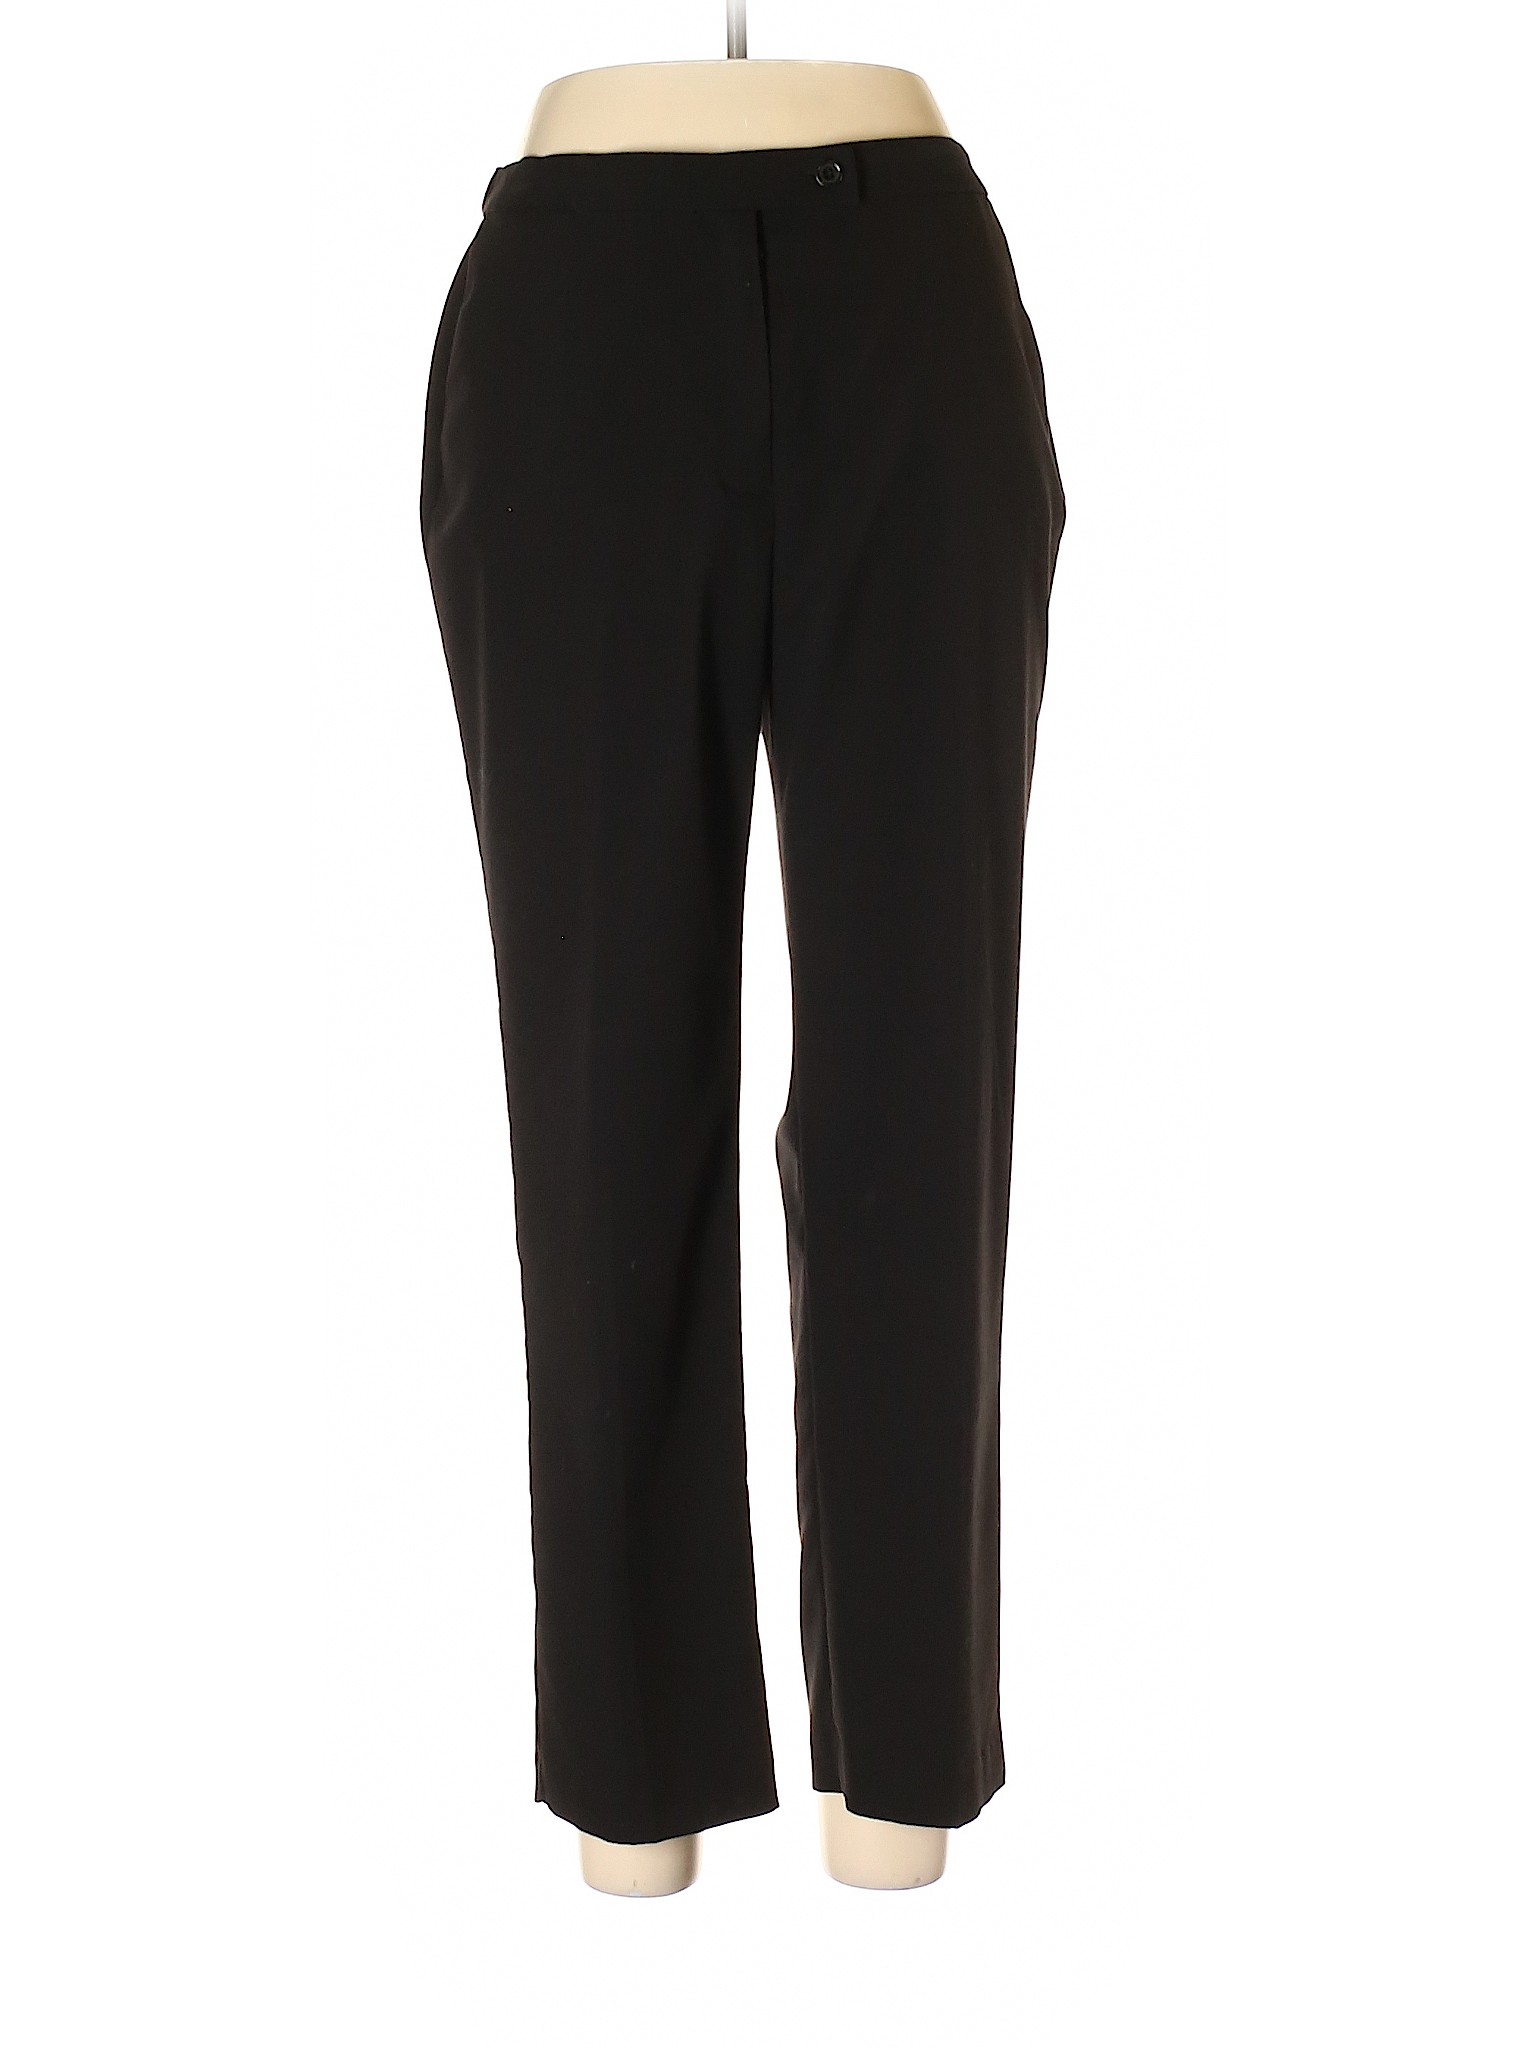 TanJay Women Black Dress Pants 10 Petites | eBay